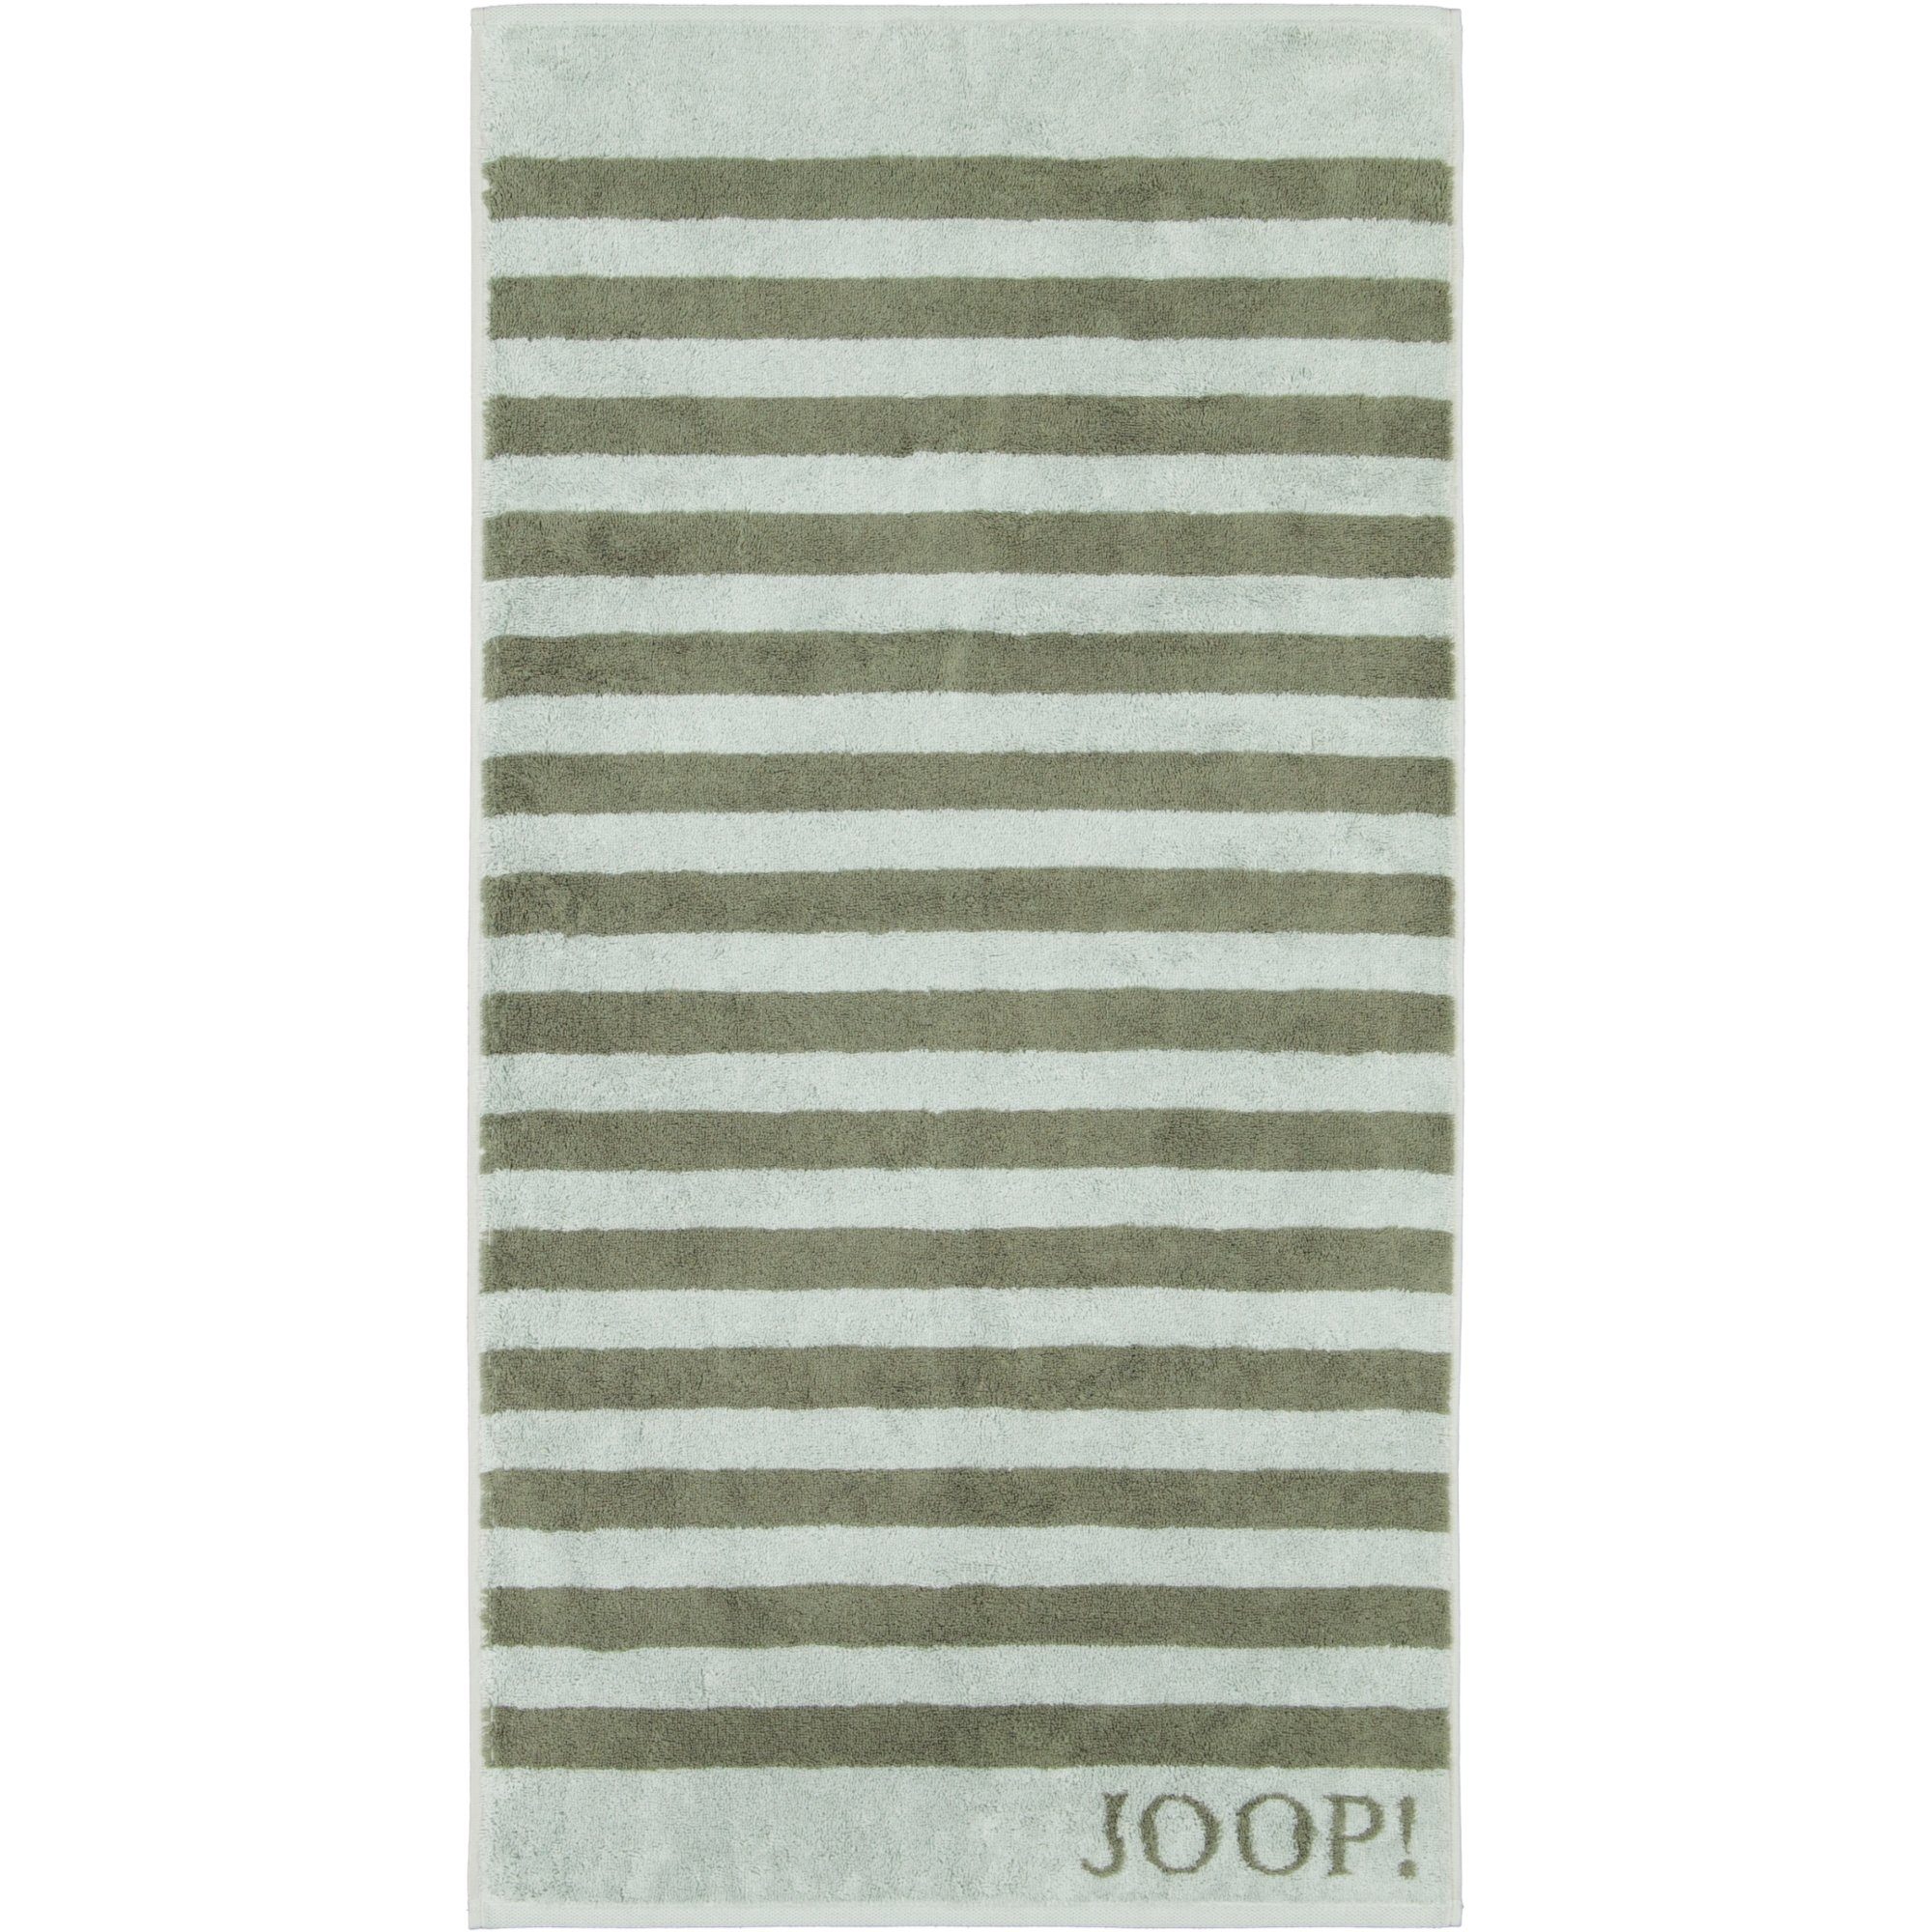 Joop! Salbei Baumwolle Handtücher 100% 1610, Classic Stripes